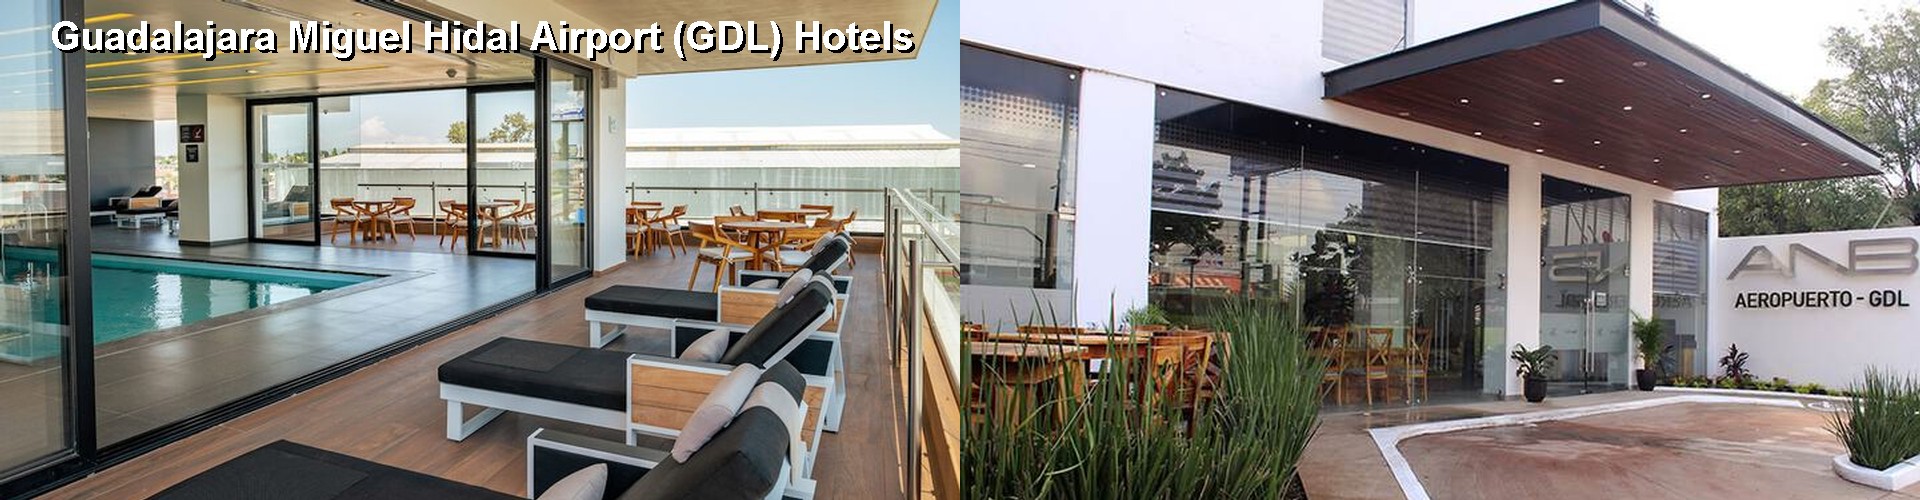 5 Best Hotels near Guadalajara Miguel Hidal Airport (GDL)